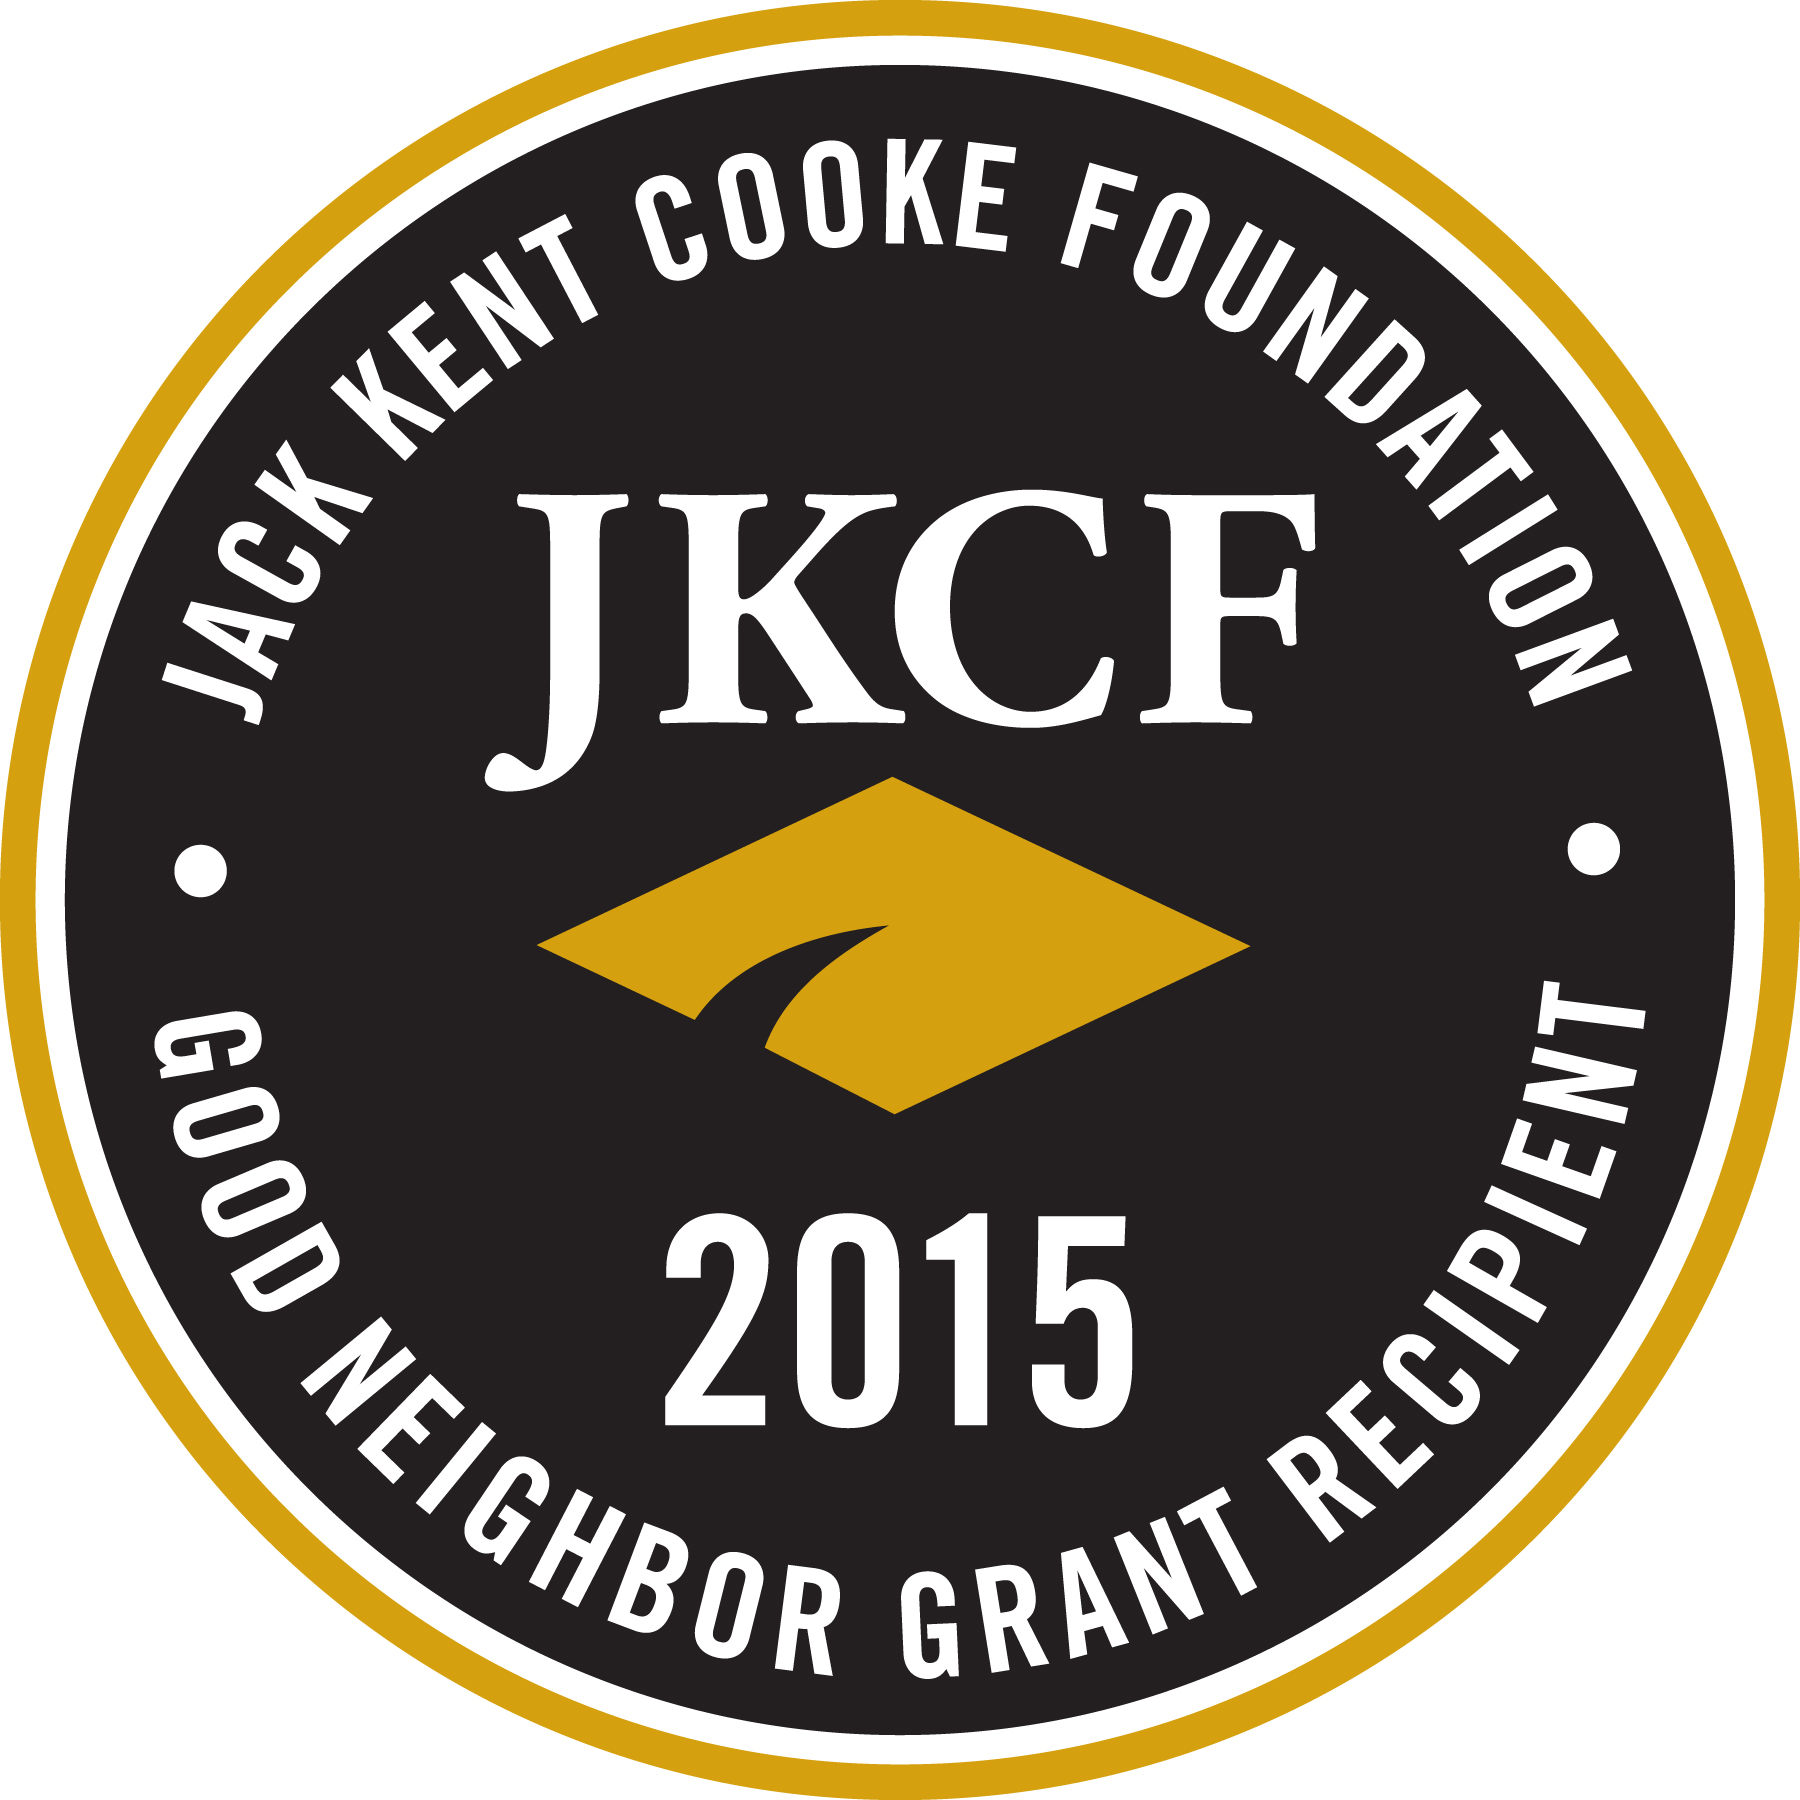 Jack Kent Cooke Foundation Good Neighbor Grant 2015 Seal